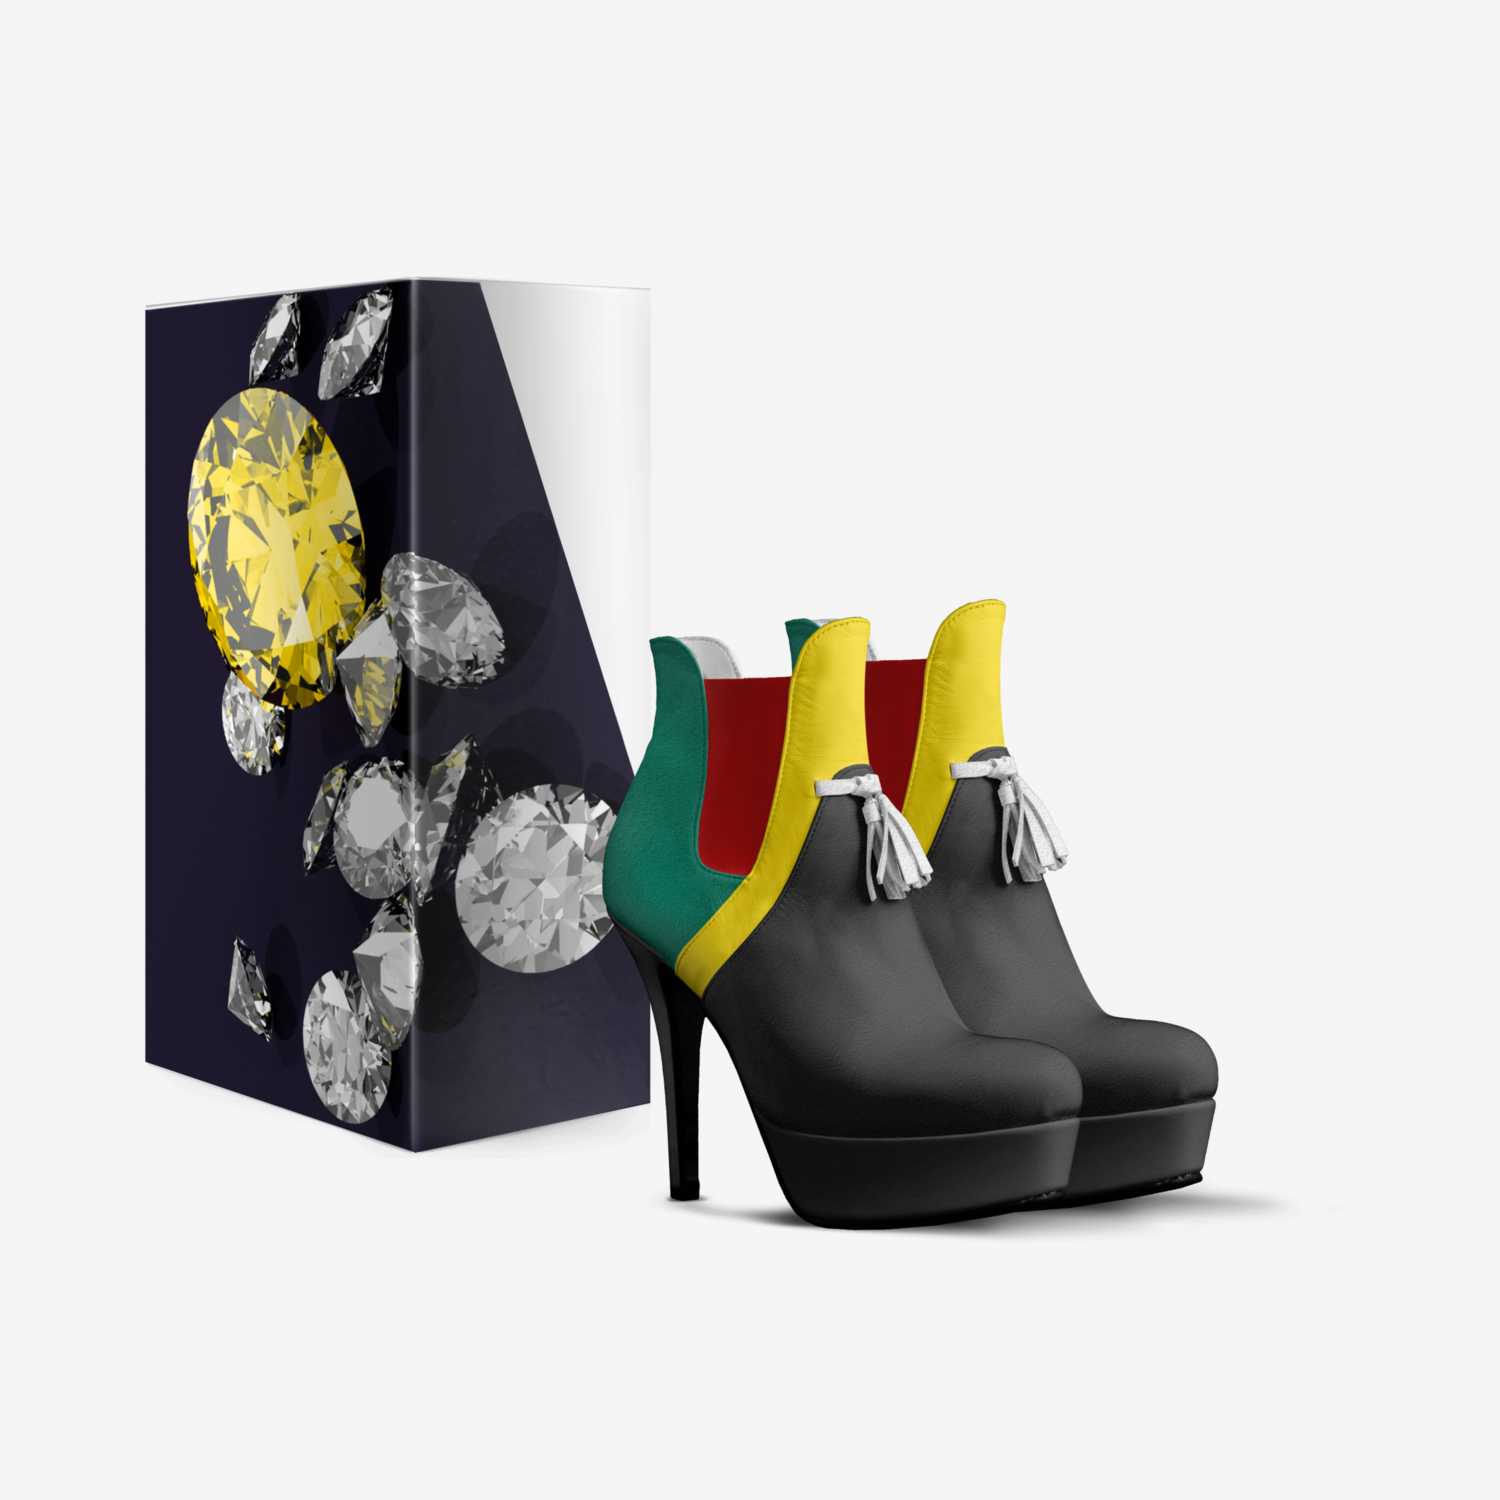 Shi custom made in Italy shoes by Rebecca Molera | Box view